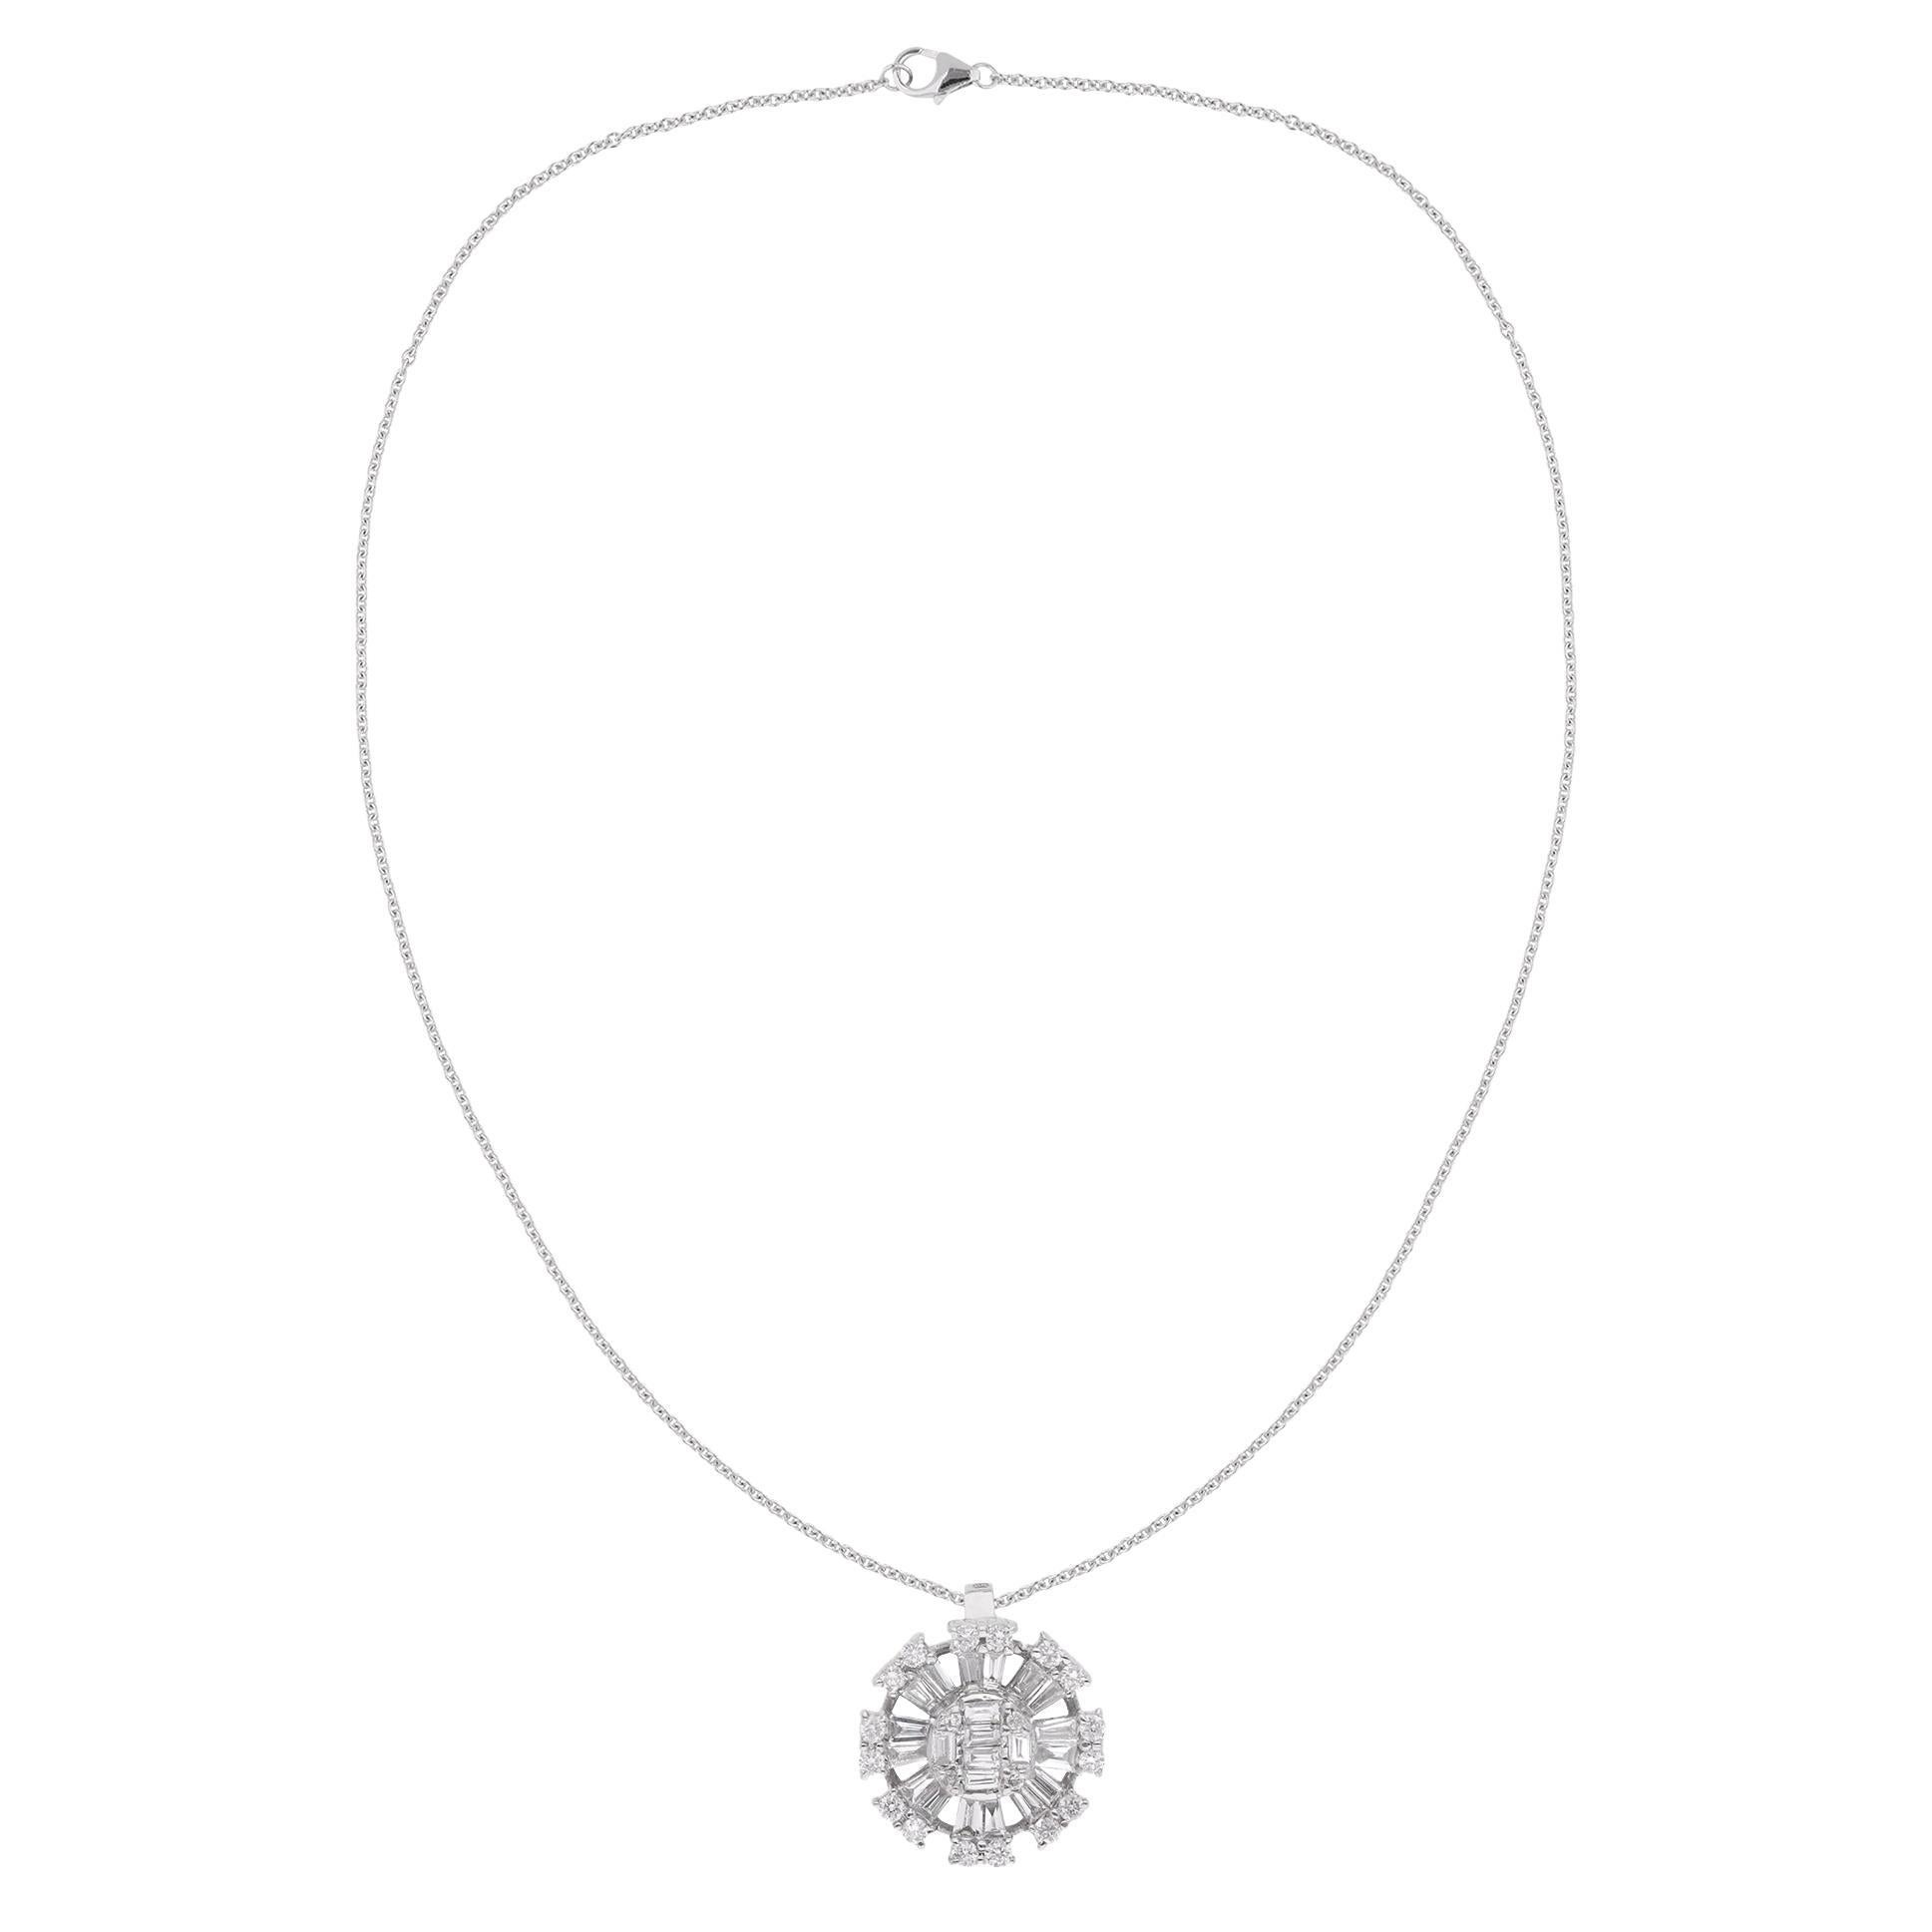 0.7 Carat Baguette & Round Diamond Designer Pendant Necklace 14 Karat White Gold